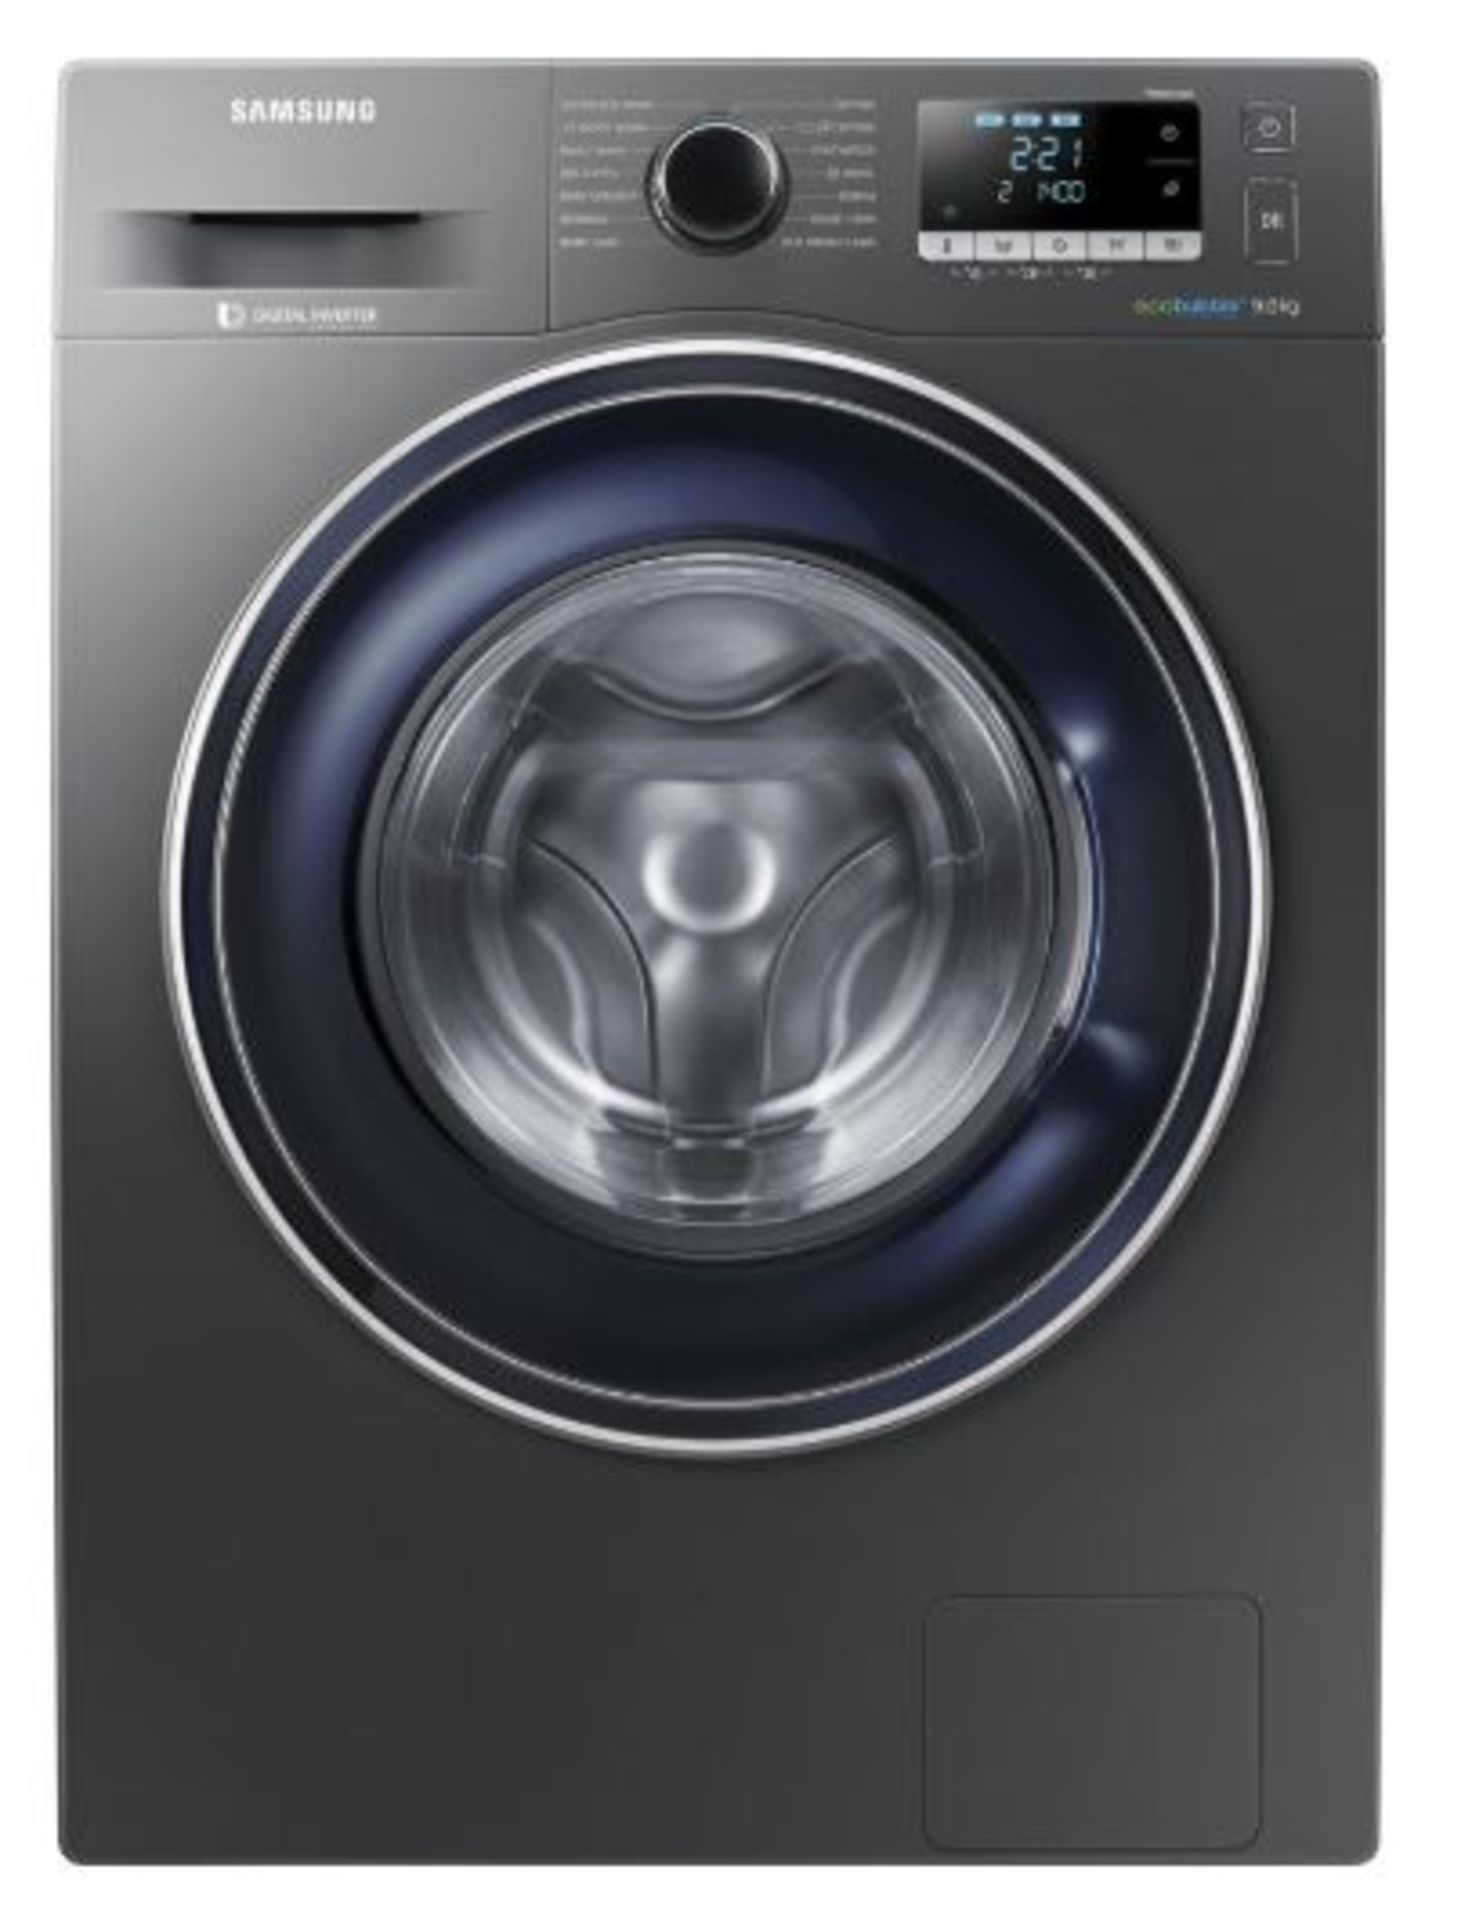 Pallet of 1 Samsung Premium Washing machine. Latest selling price £369*£419